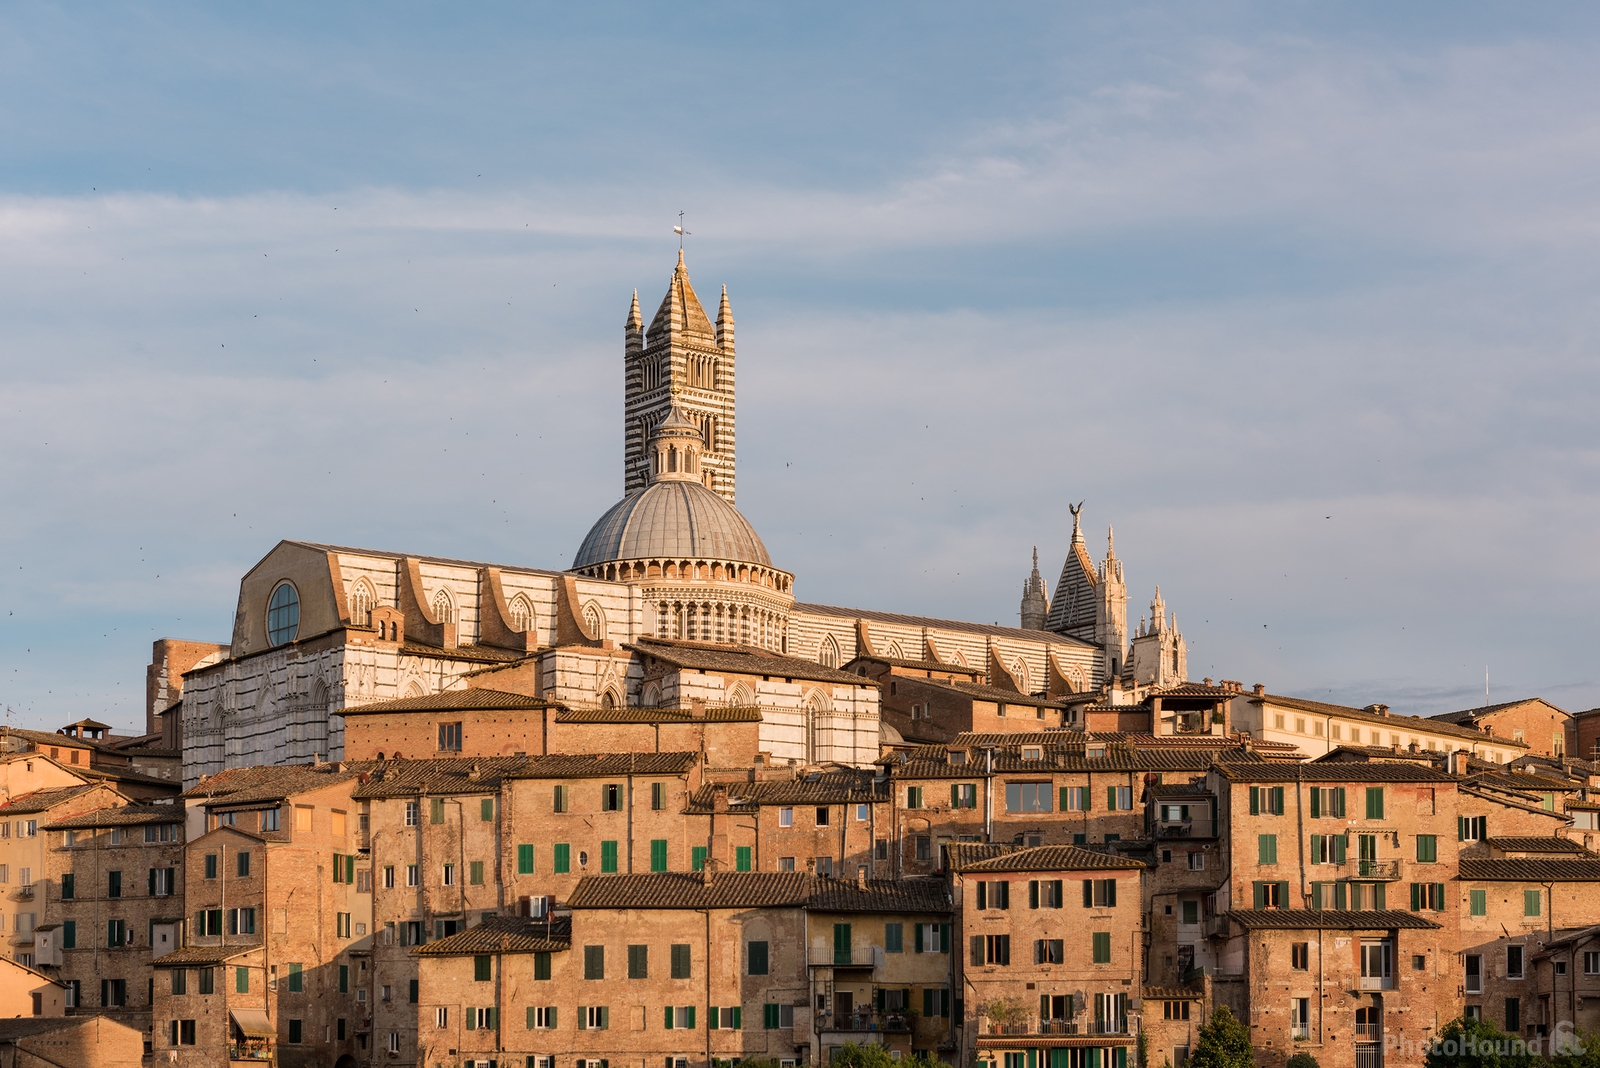 Image of Duomo di Siena West View by Luka Esenko